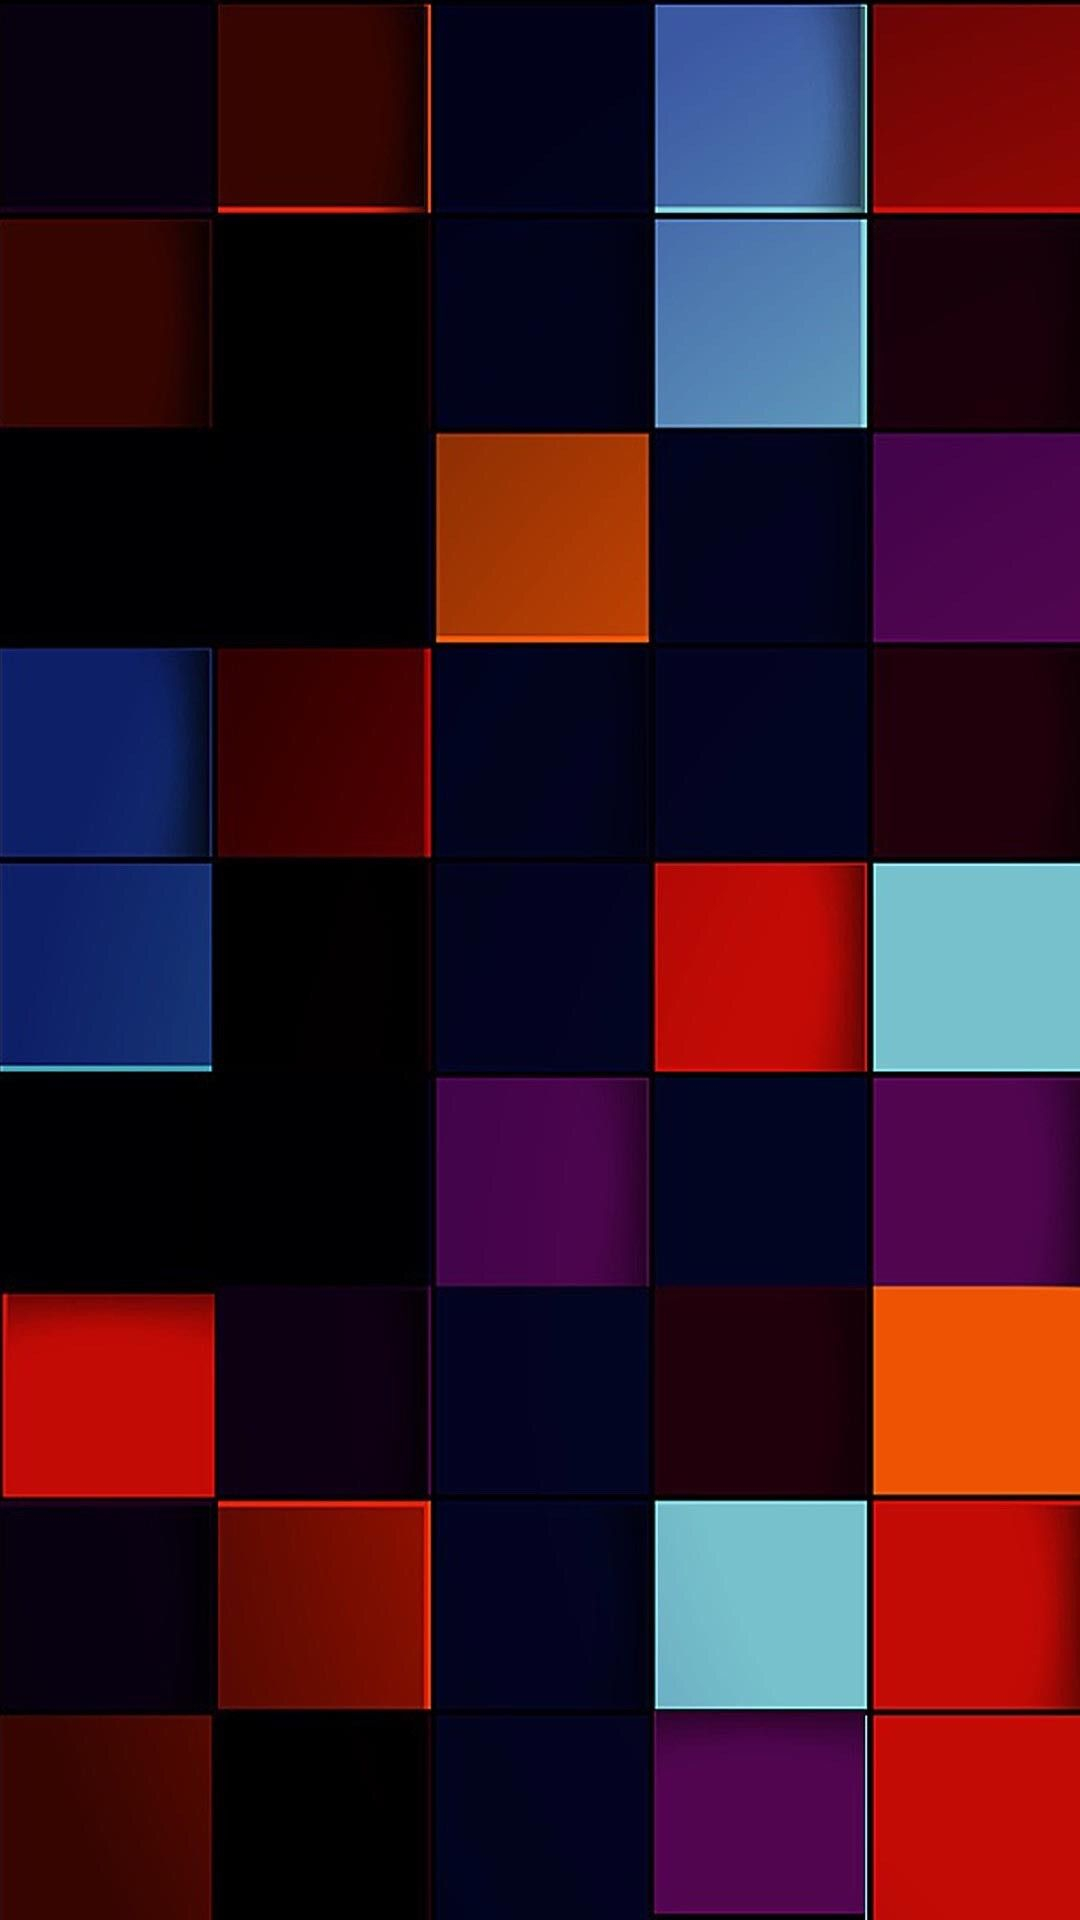 1080x1920 Colorful Geometric Shapes Wallpaper | Geometric shapes wallpaper, Galaxy phone wallpaper, Android wallpaper